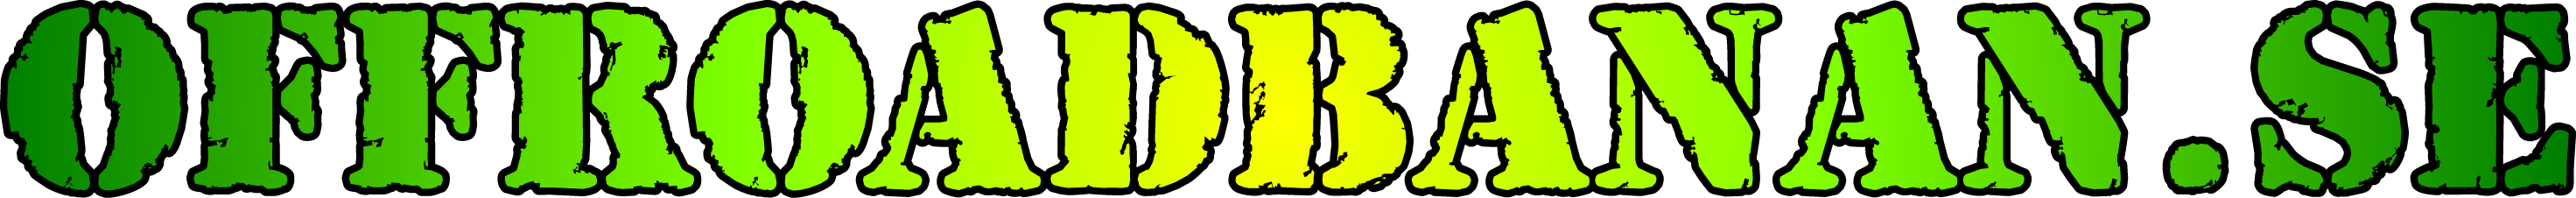 Offroadbanan logotype